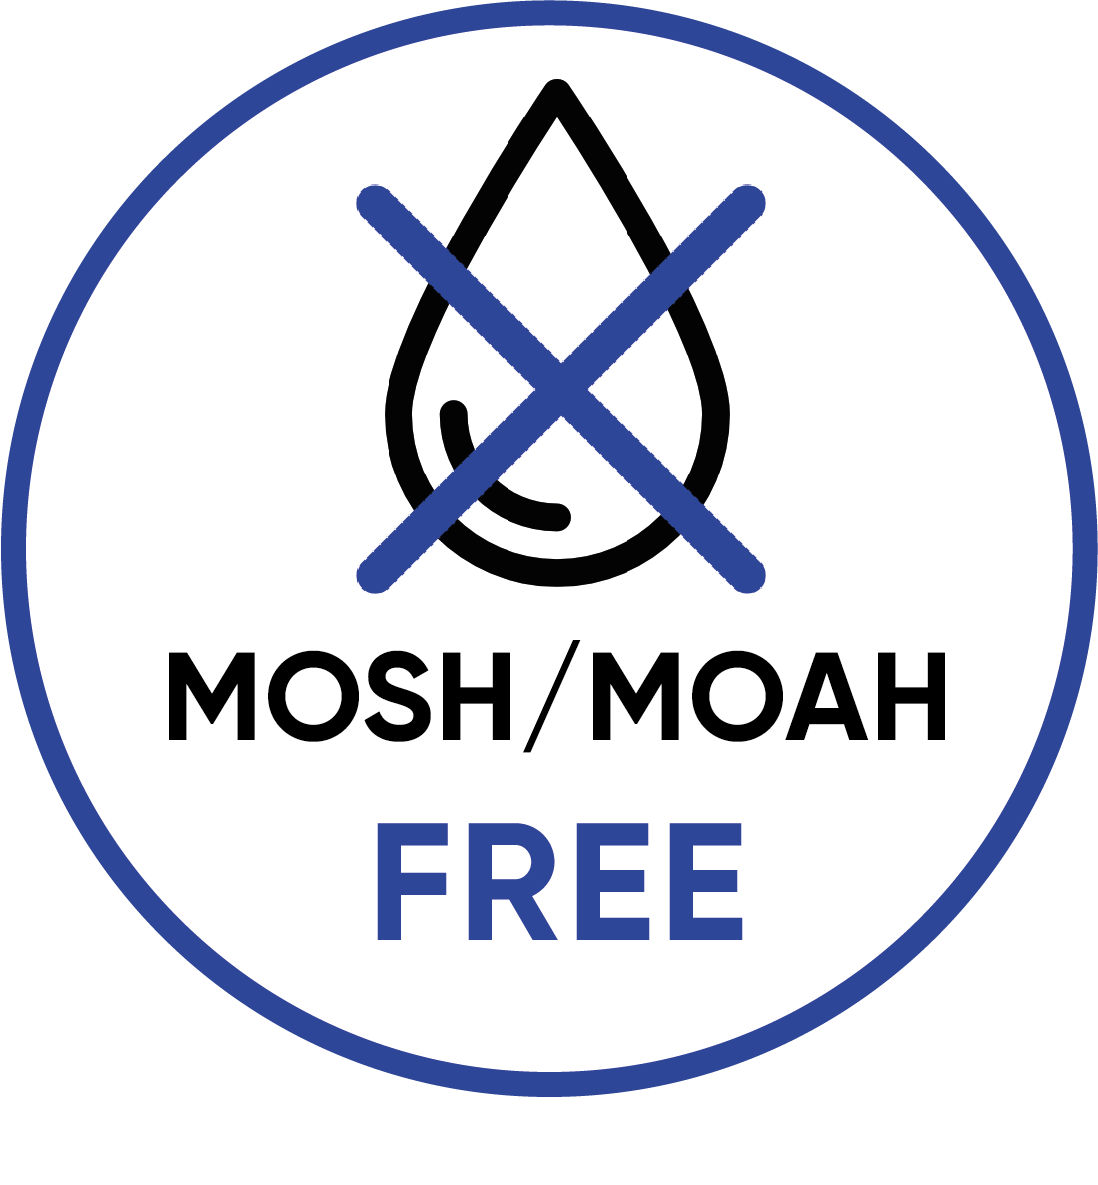 MOSH_MOAH Free Logo